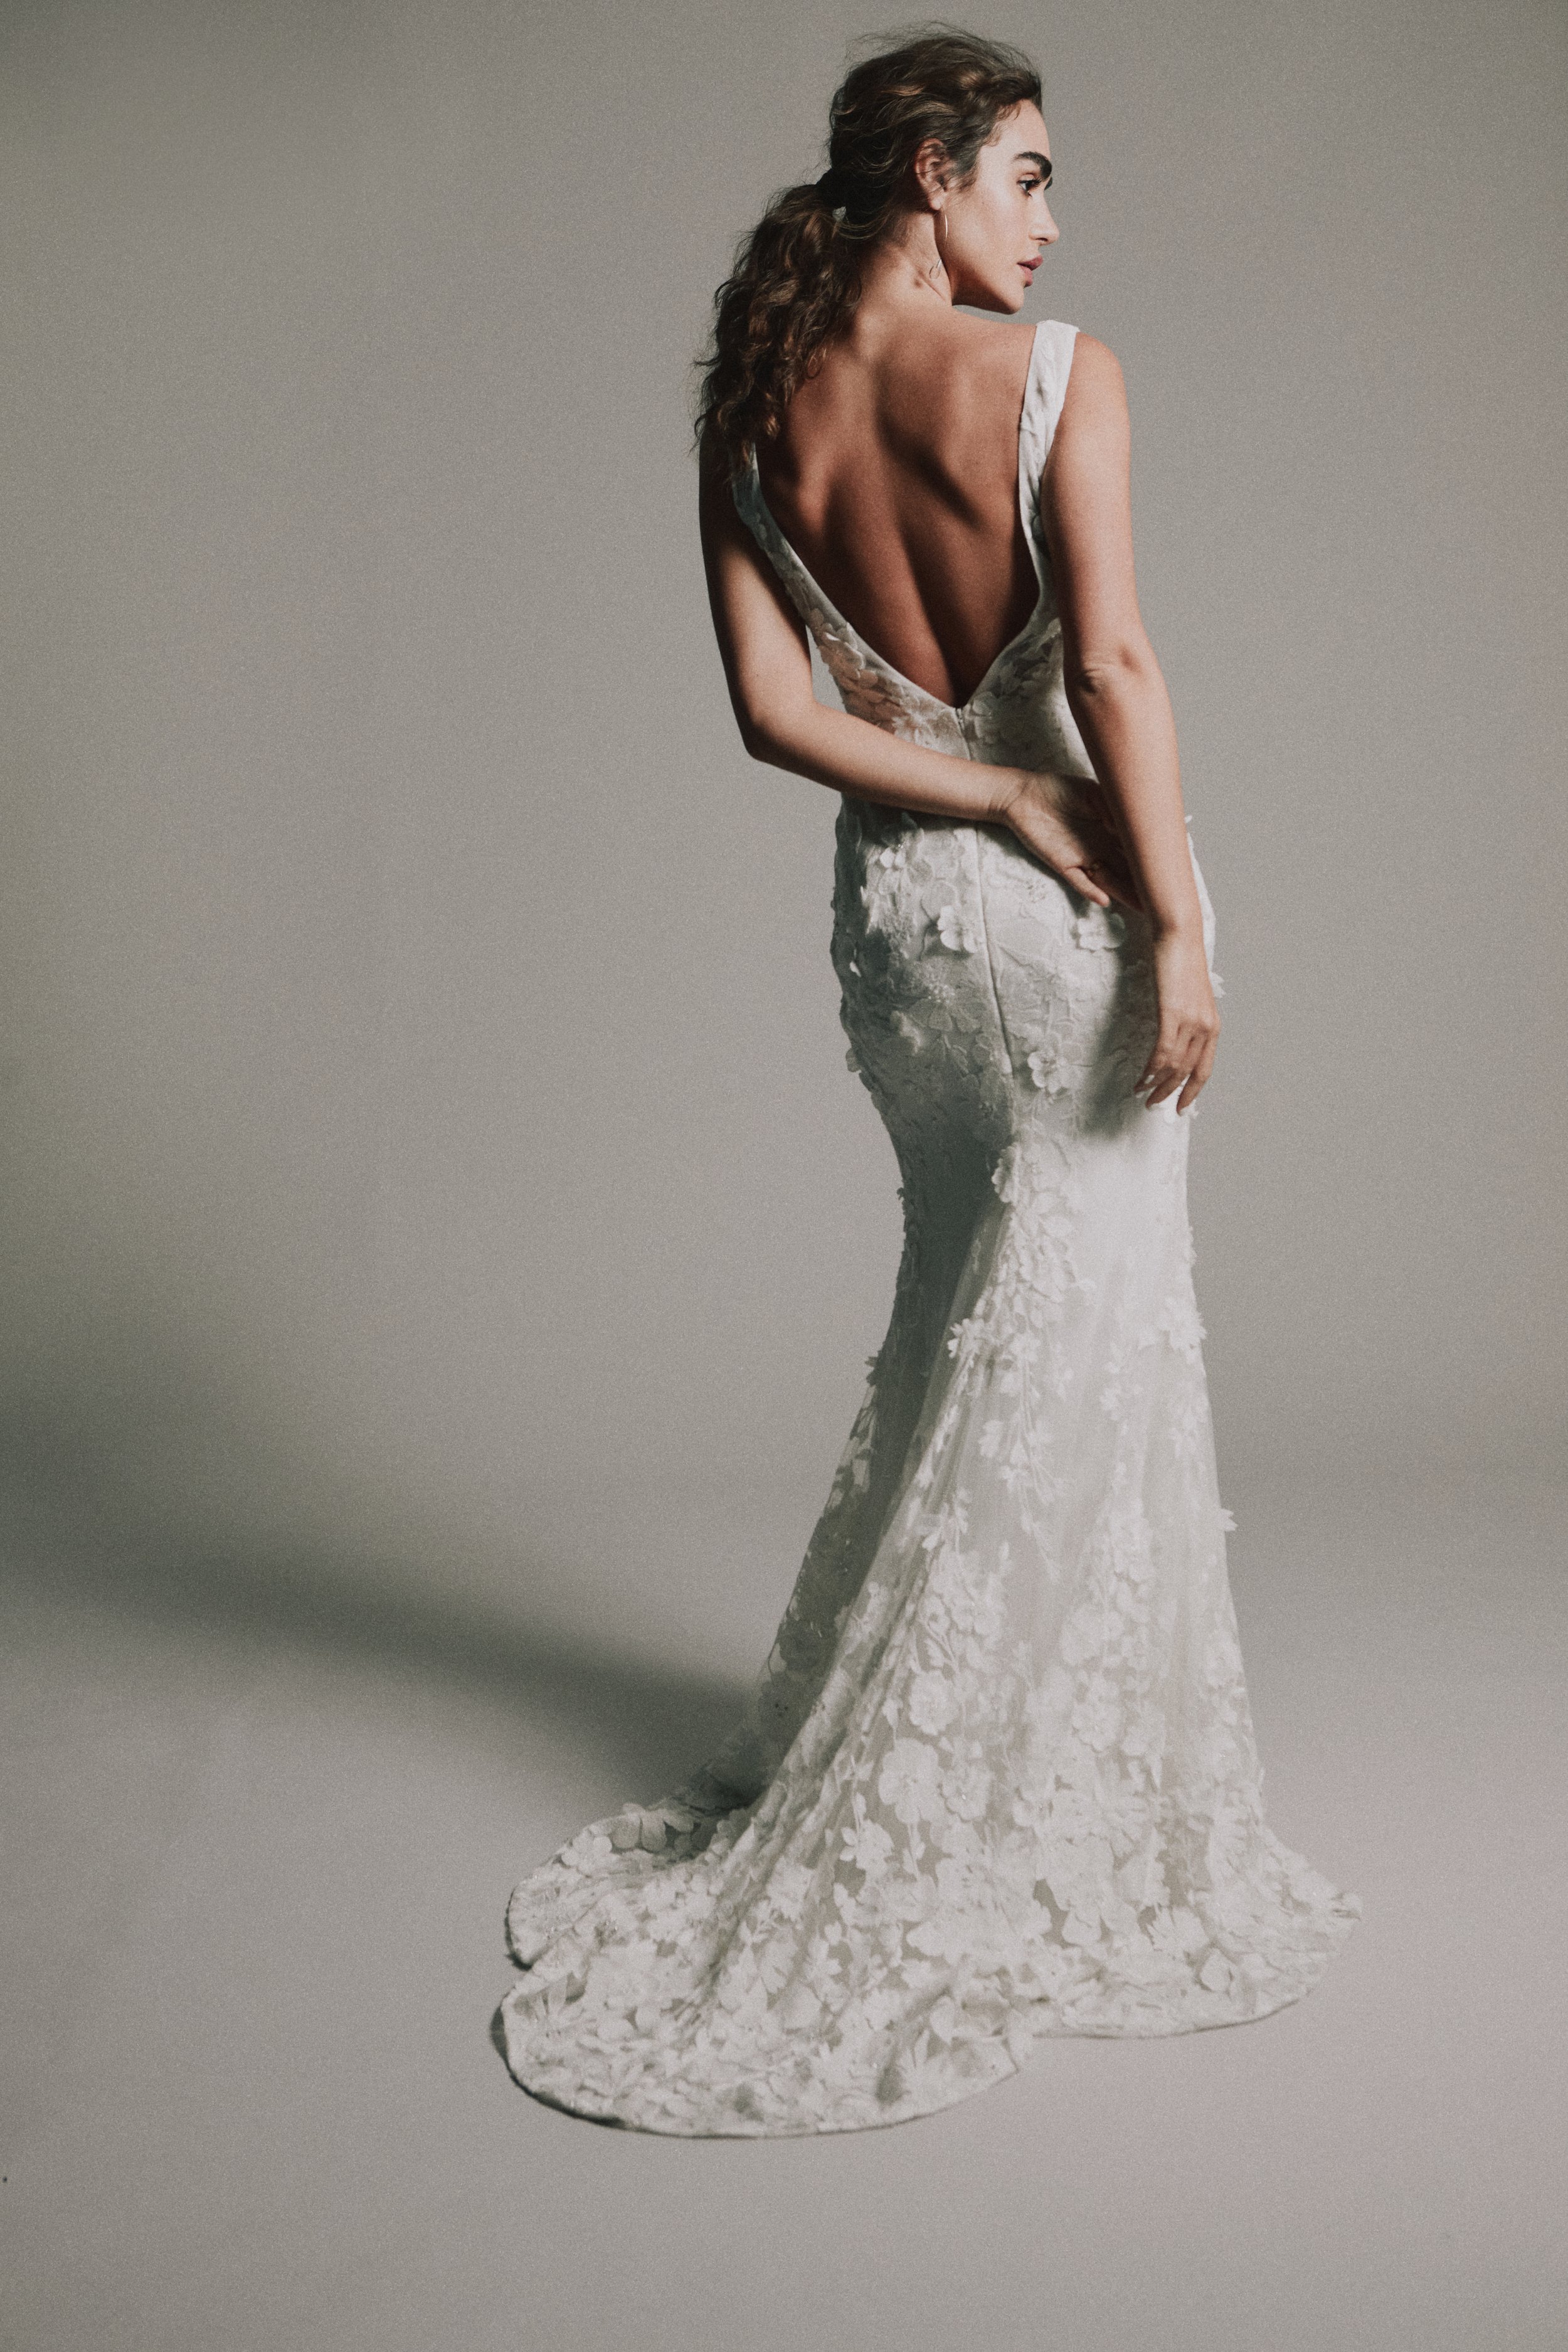 Zinnia lace wedding dress v neck back.jpg